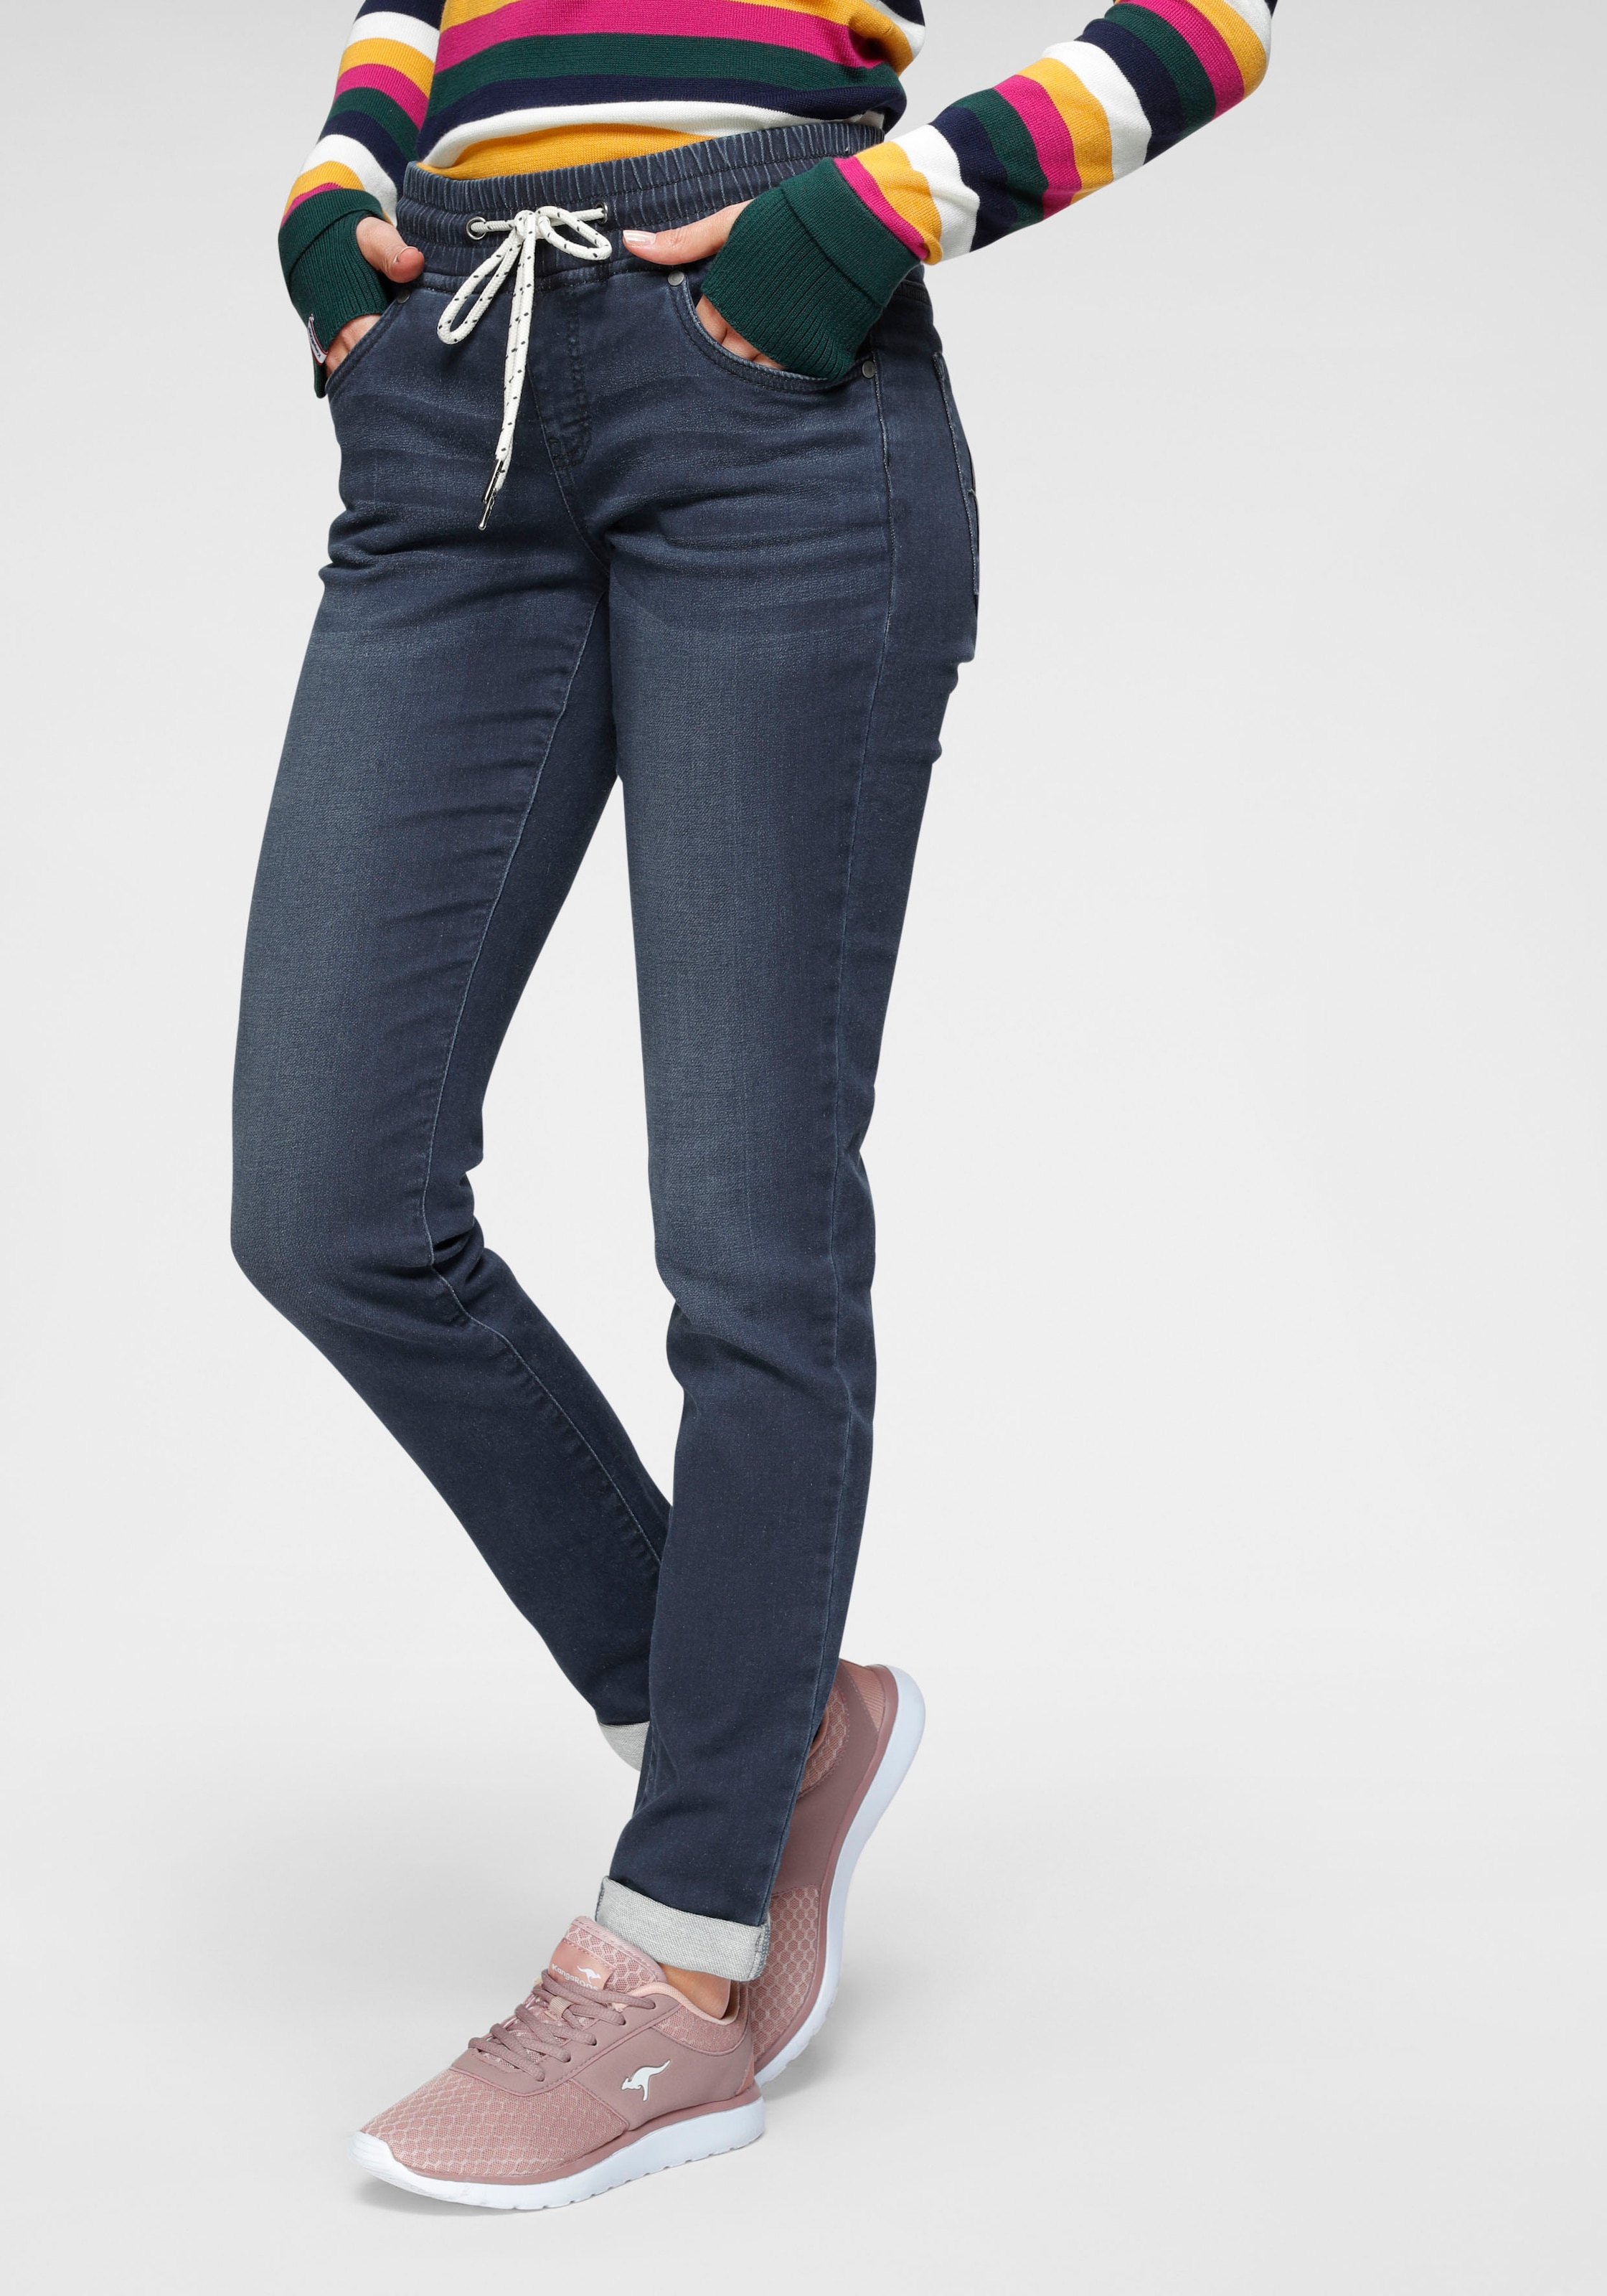 KangaROOS Bequeme im Jeans Online-Shop bestellen